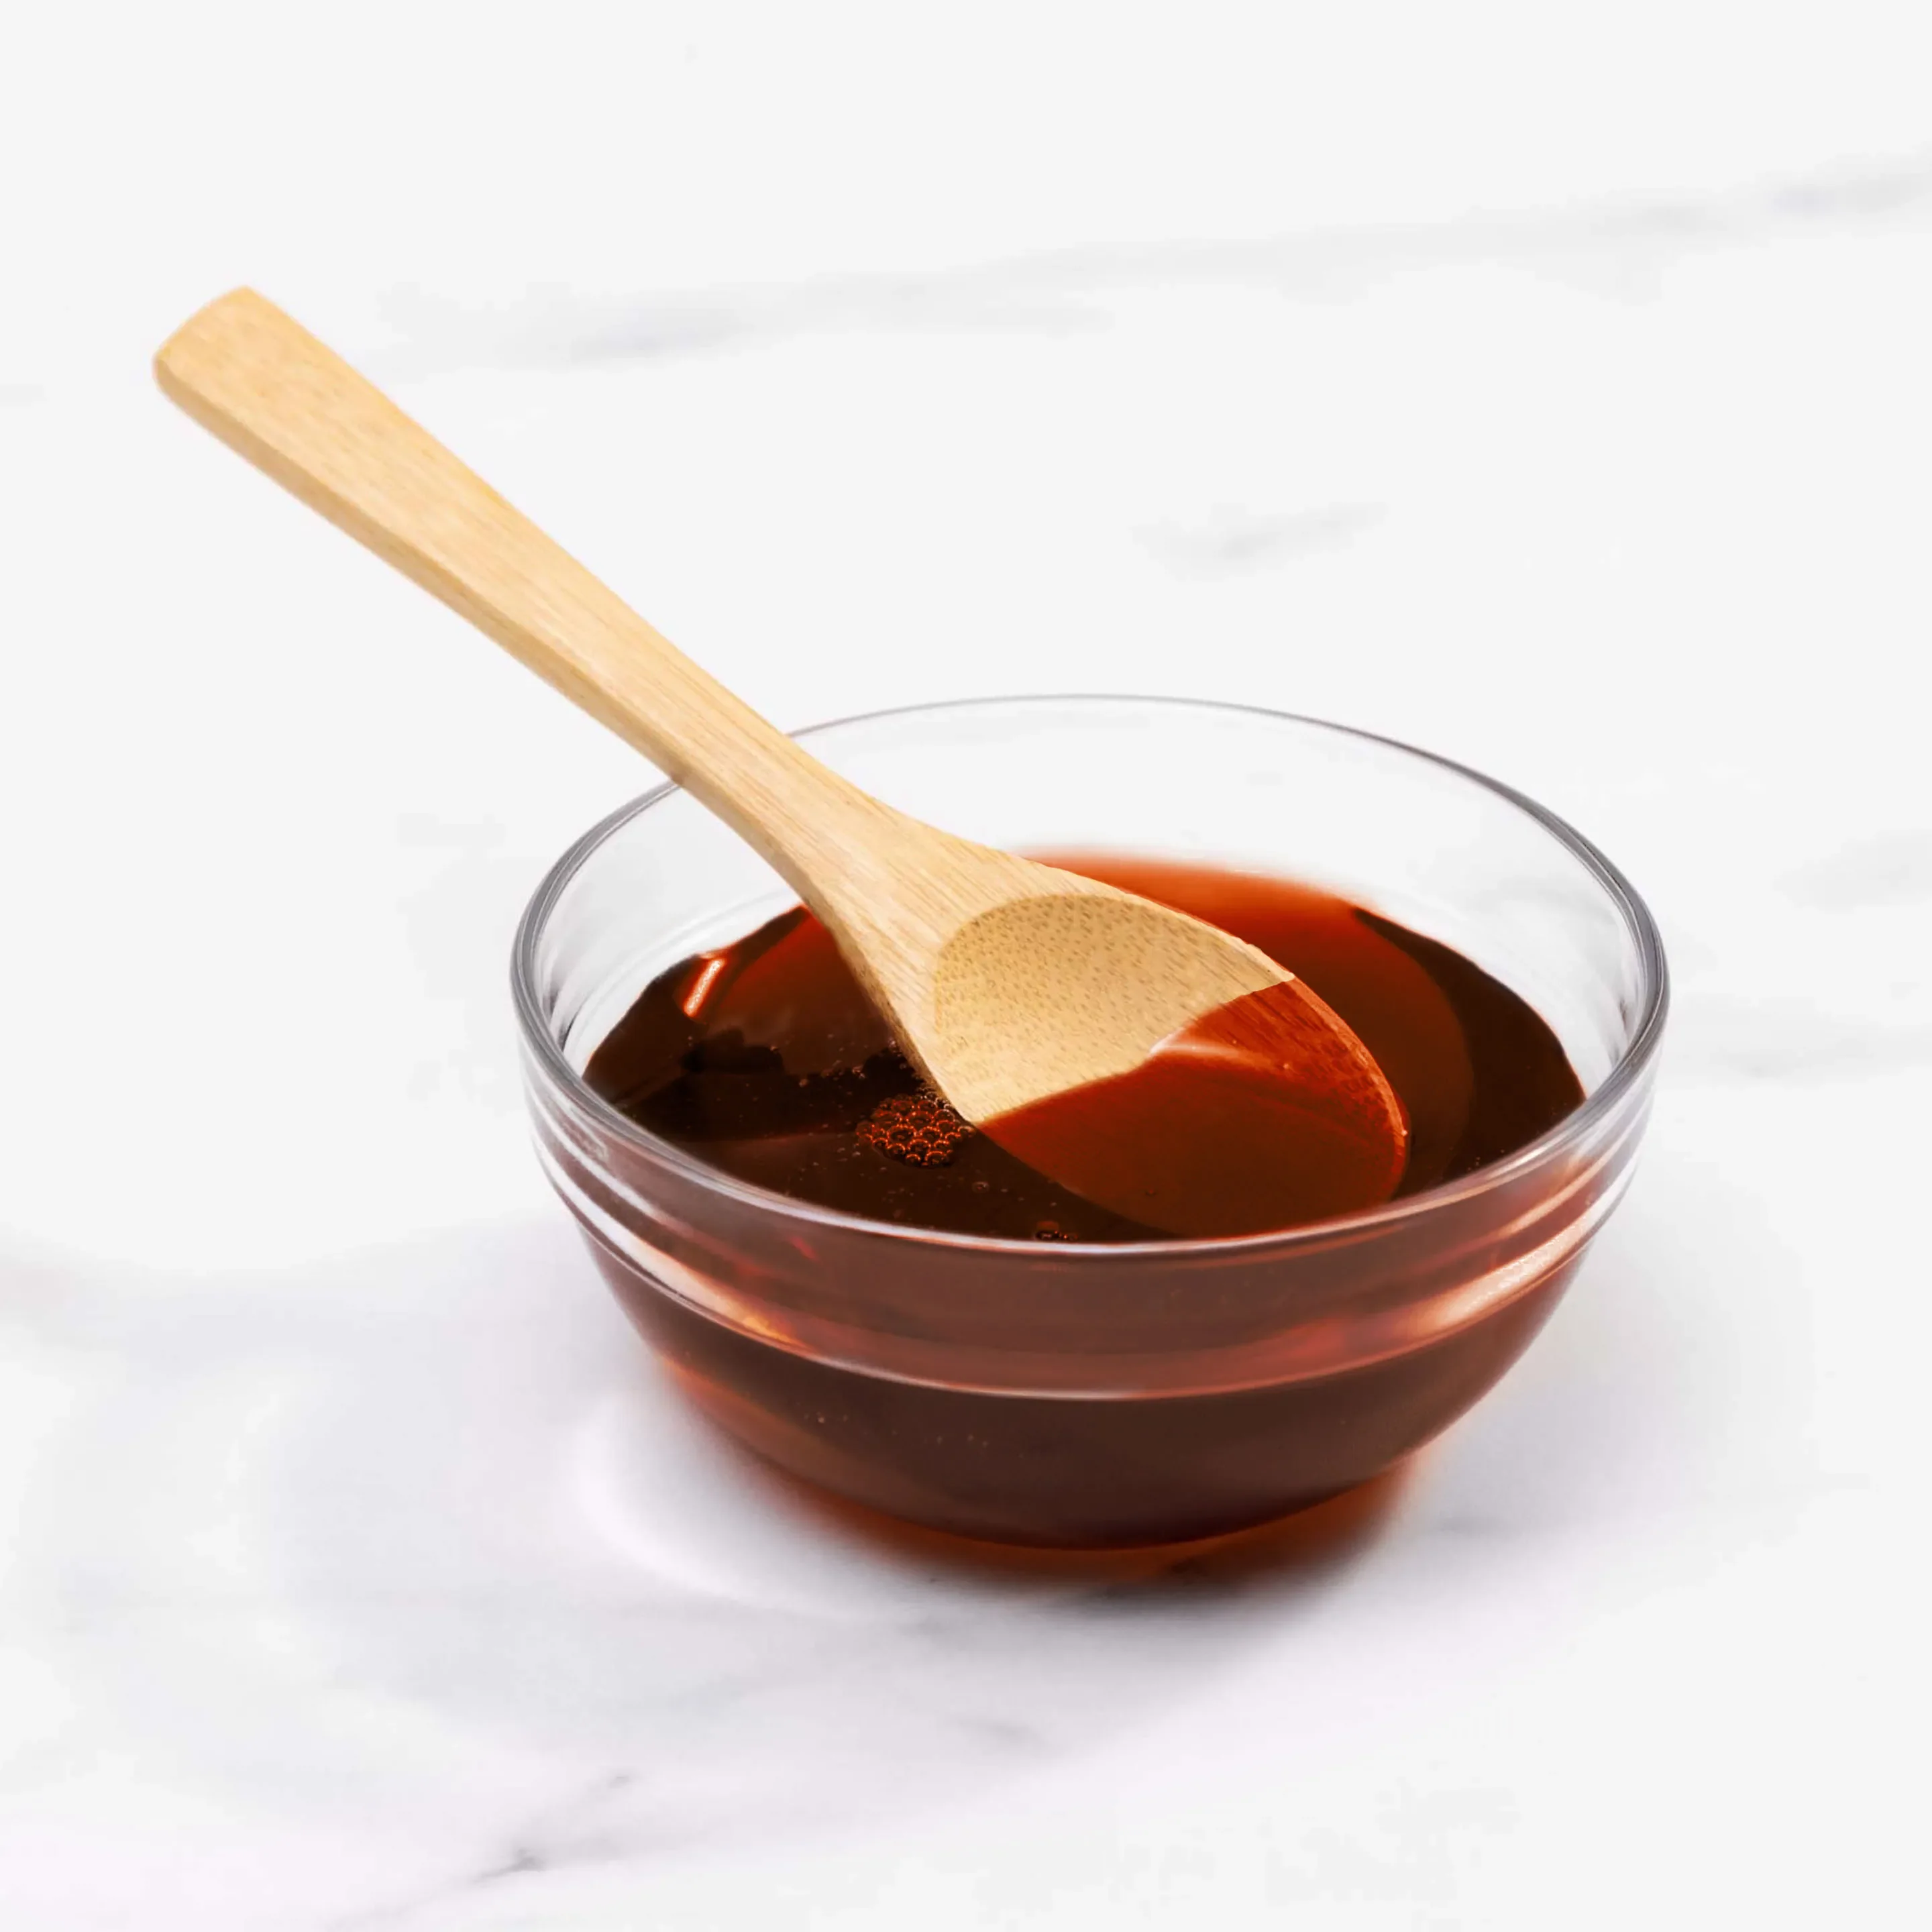 Hazelnut syrup in clear bowl